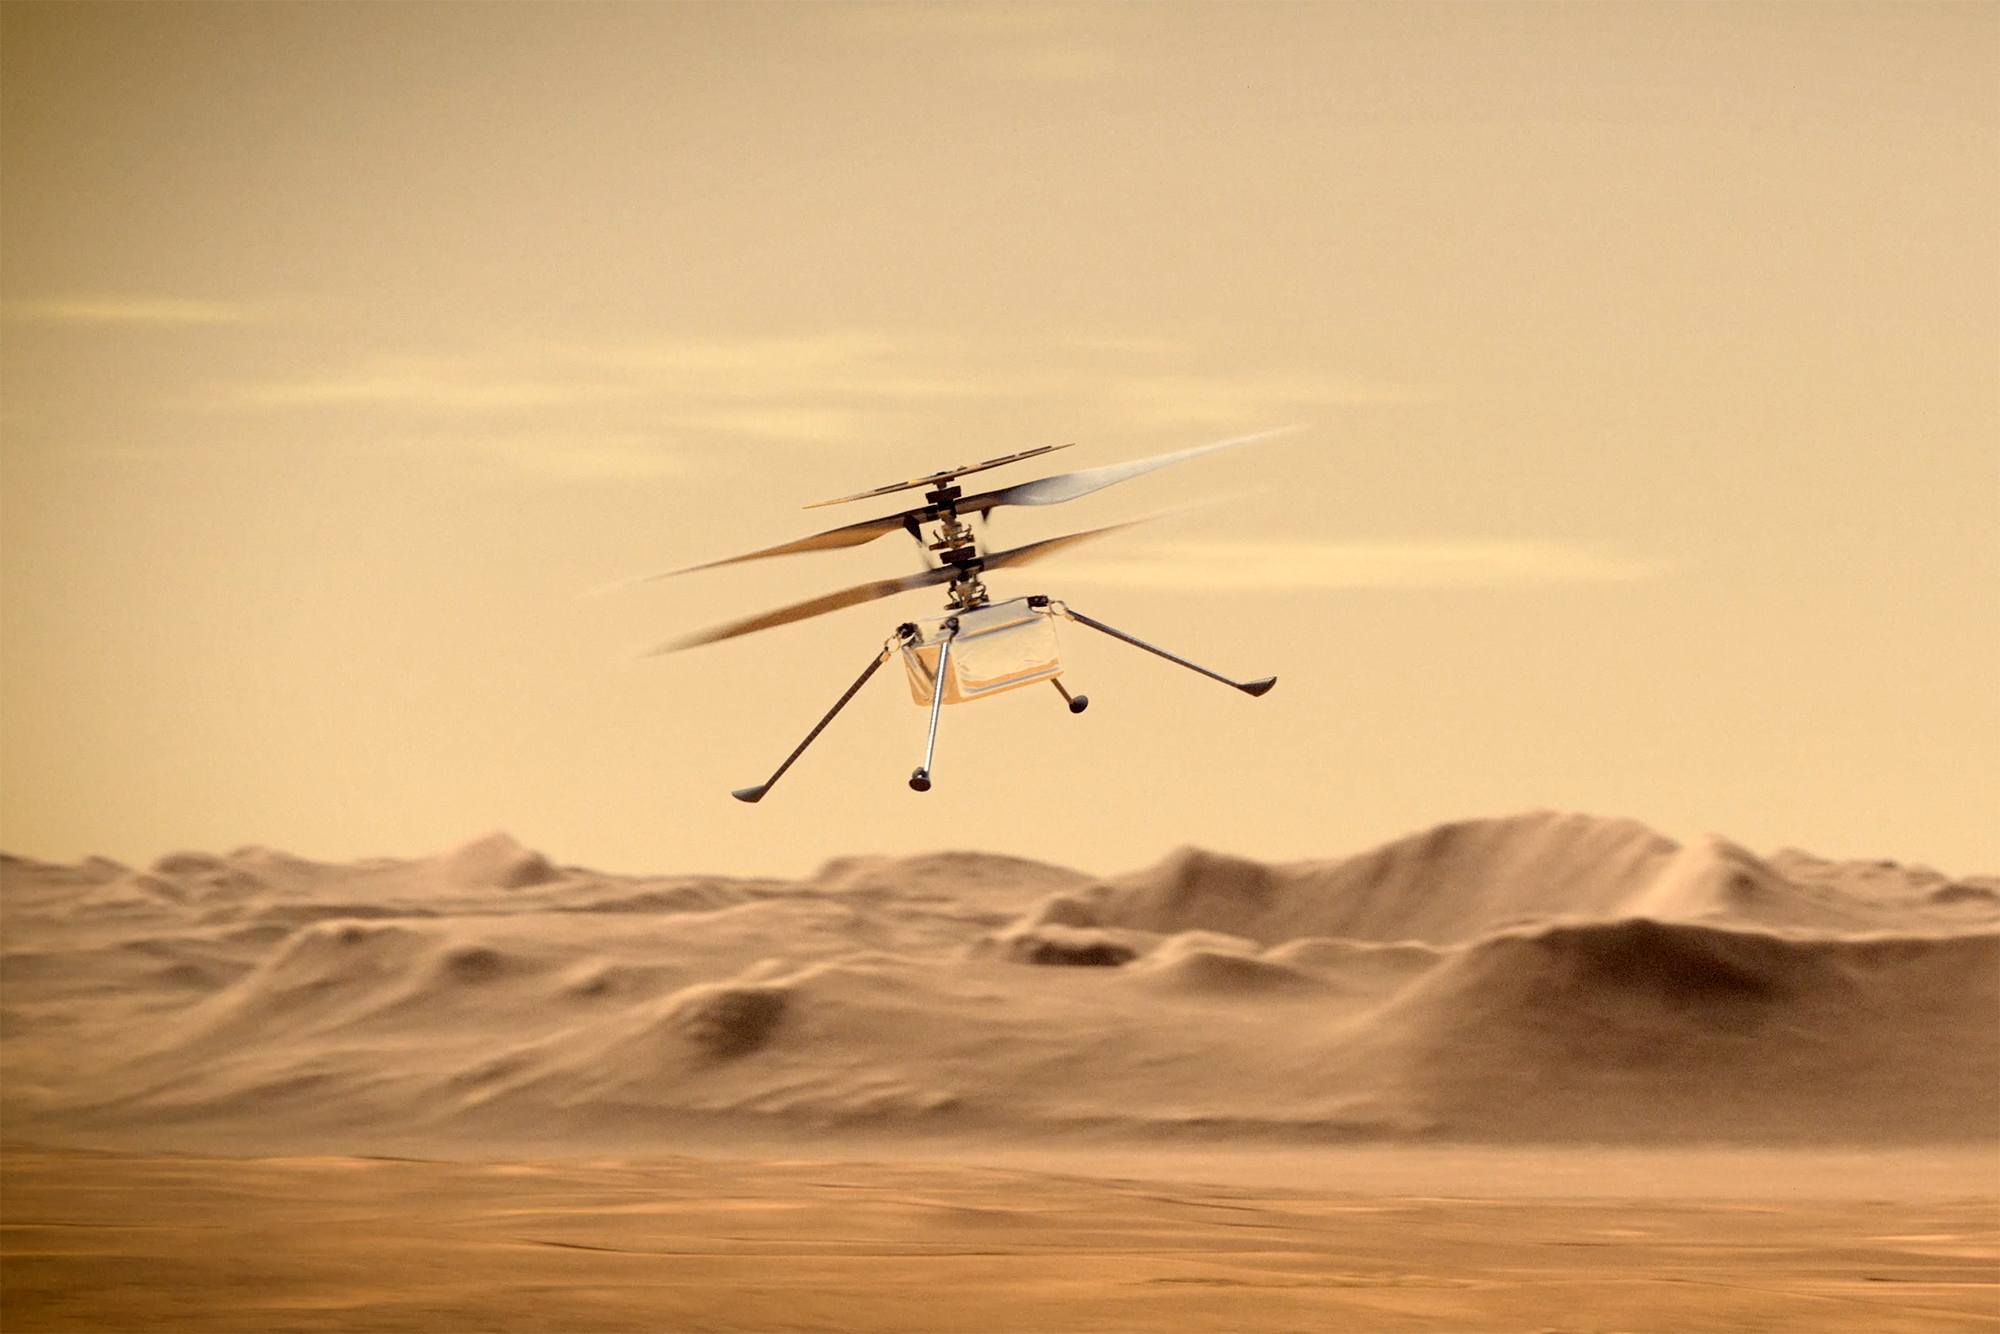 Ingenuity Mars helicopter bags prestigious aviation award